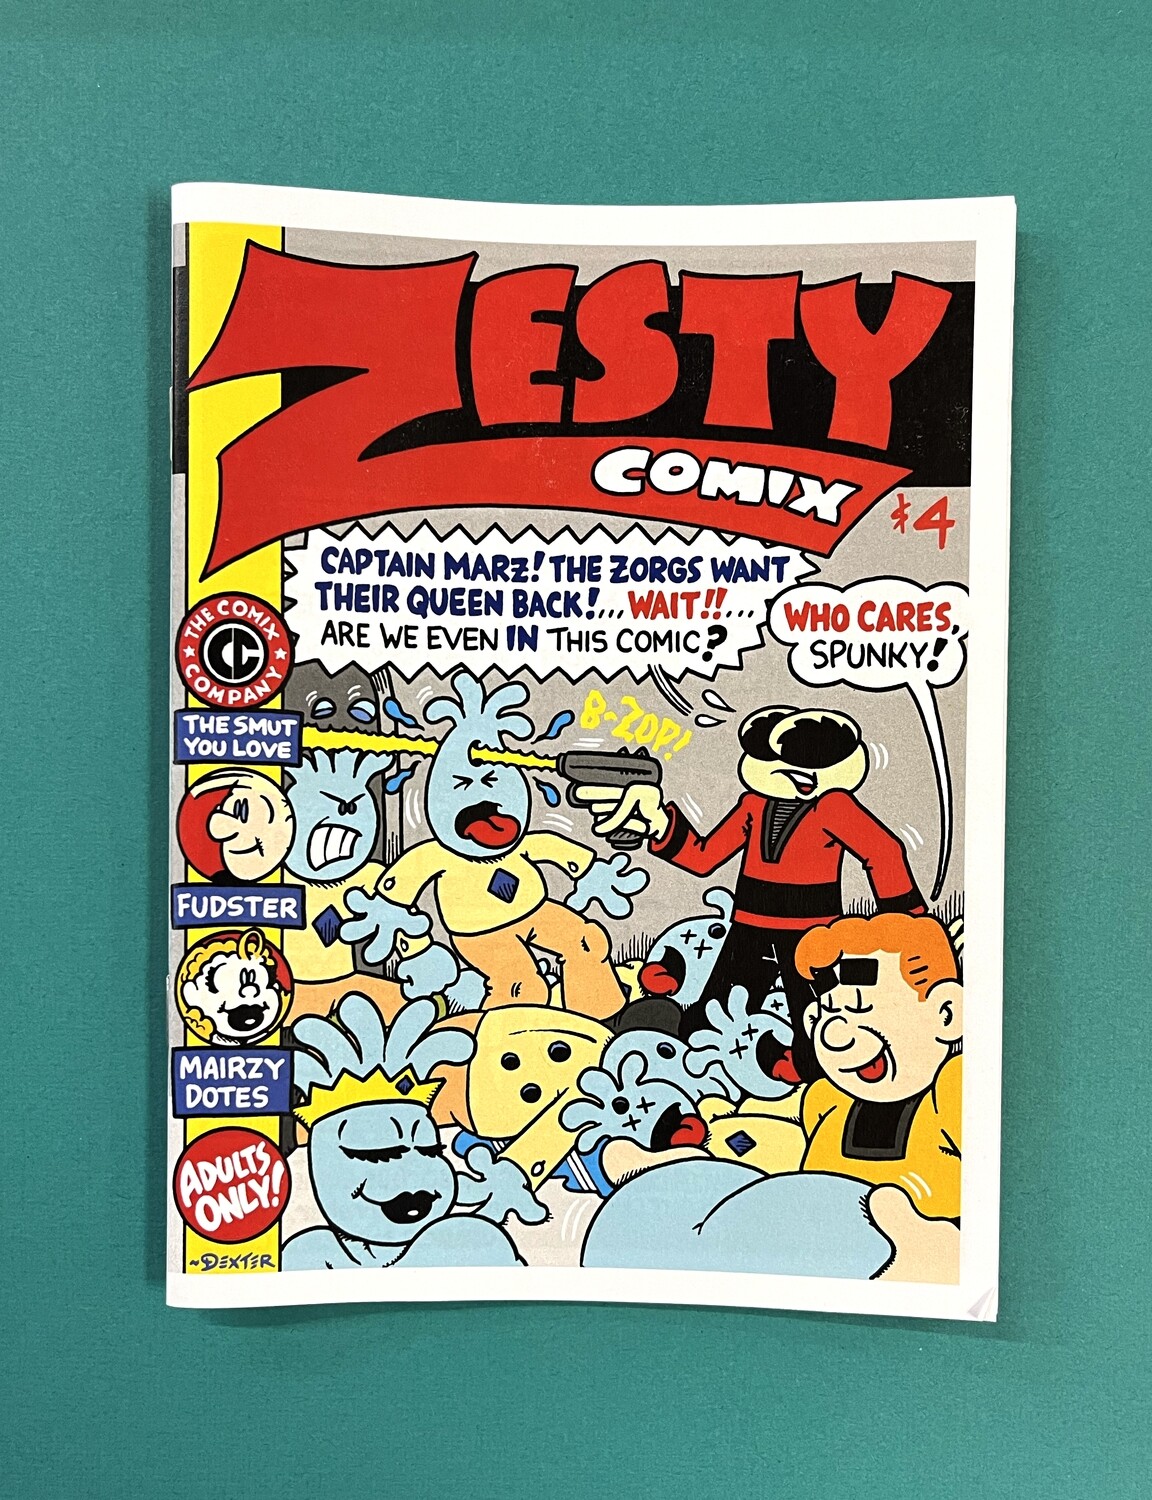 ZESTY Comix, comic by Dexter Cockburn